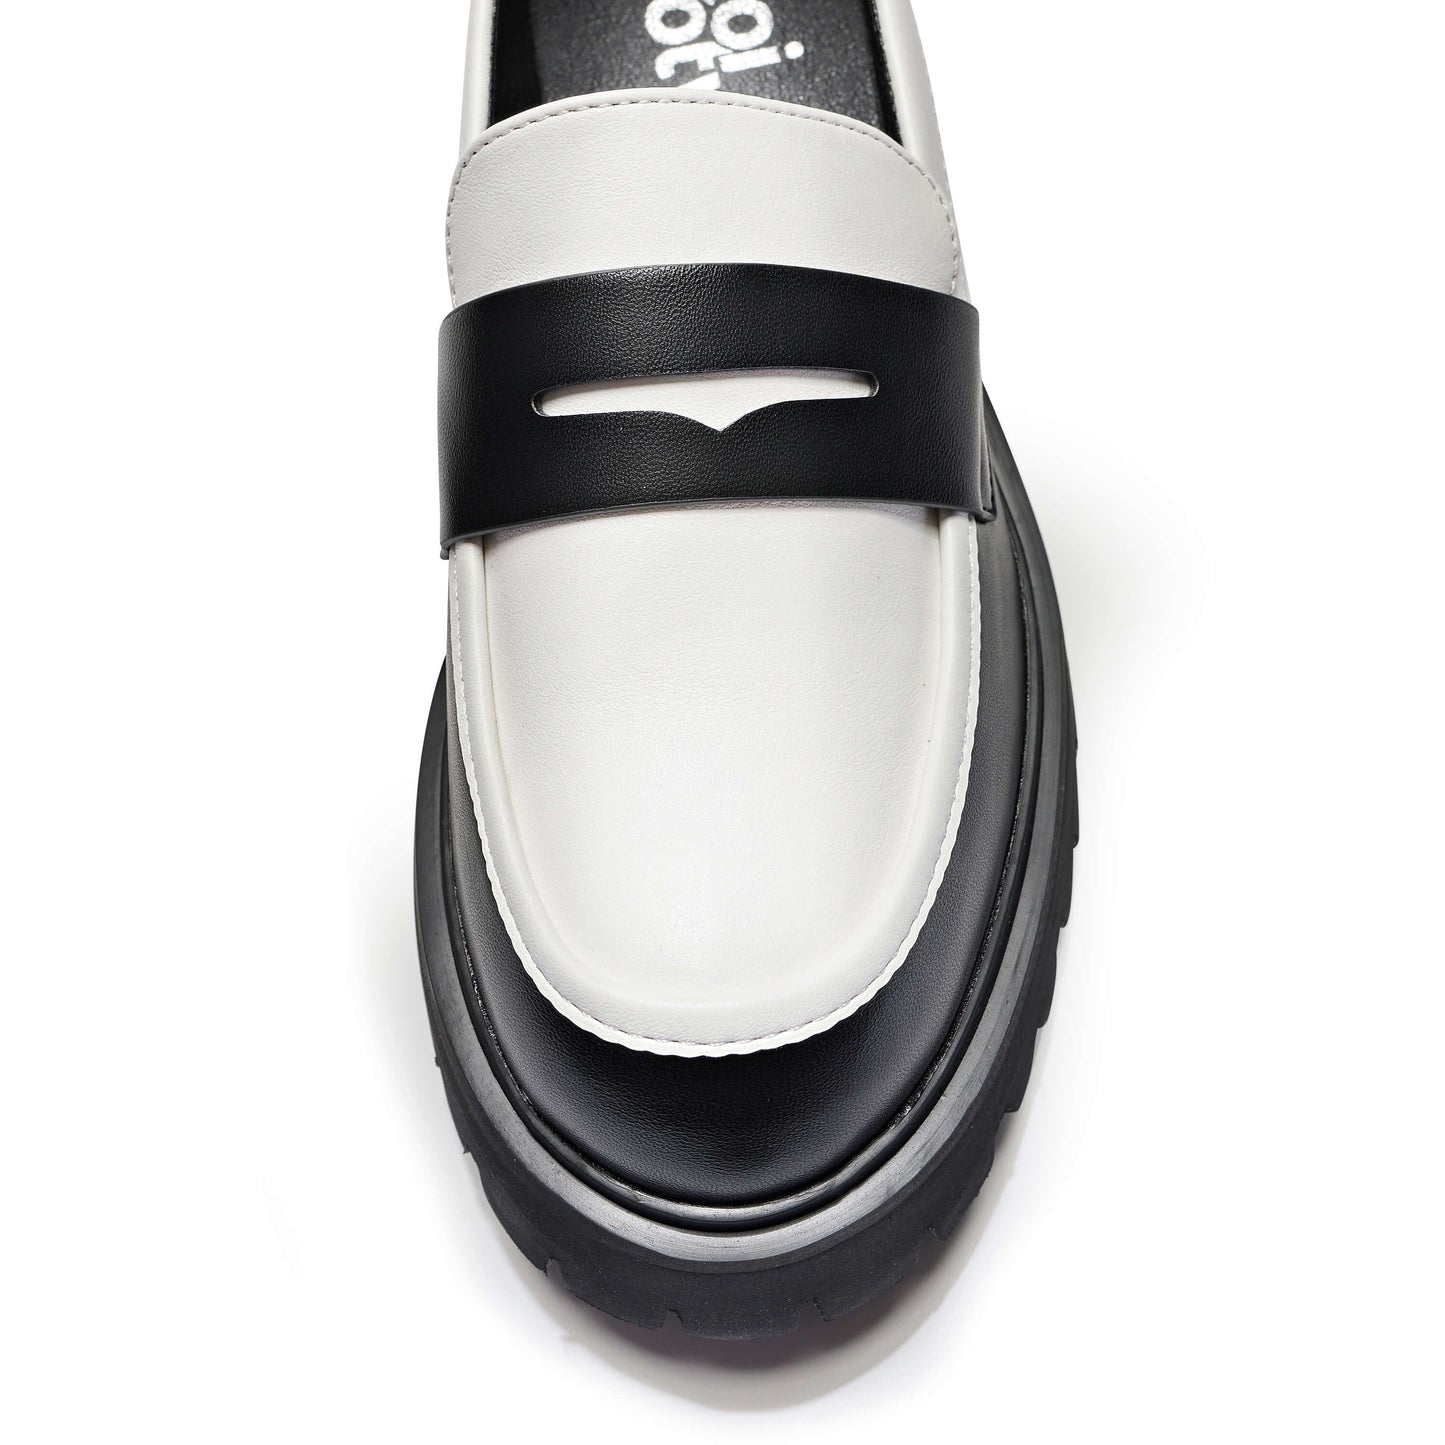 Birch Monochrome Loafers - Shoes - KOI Footwear - Multi - Top View